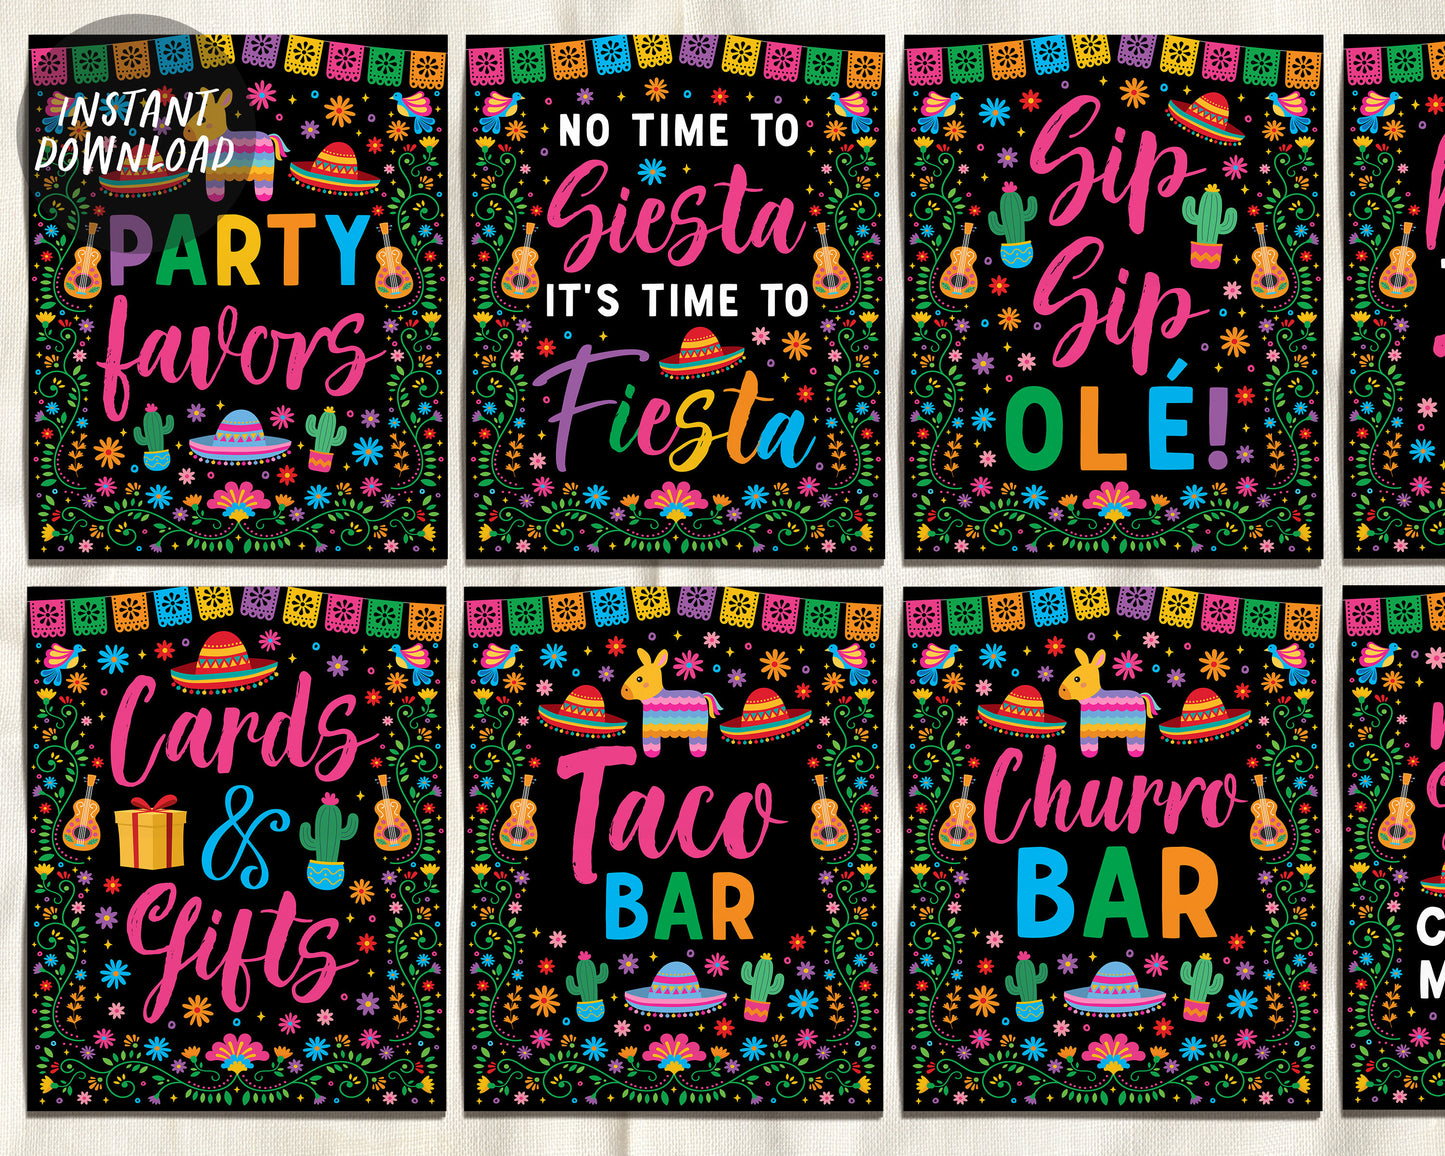 Fiesta Party Signs BUNDLE For Birthday, Mexican Theme Cinco de Mayo Signage, Taco Churro Bar Food Table Sign, Sip Sip Ole, Muchas Gracias